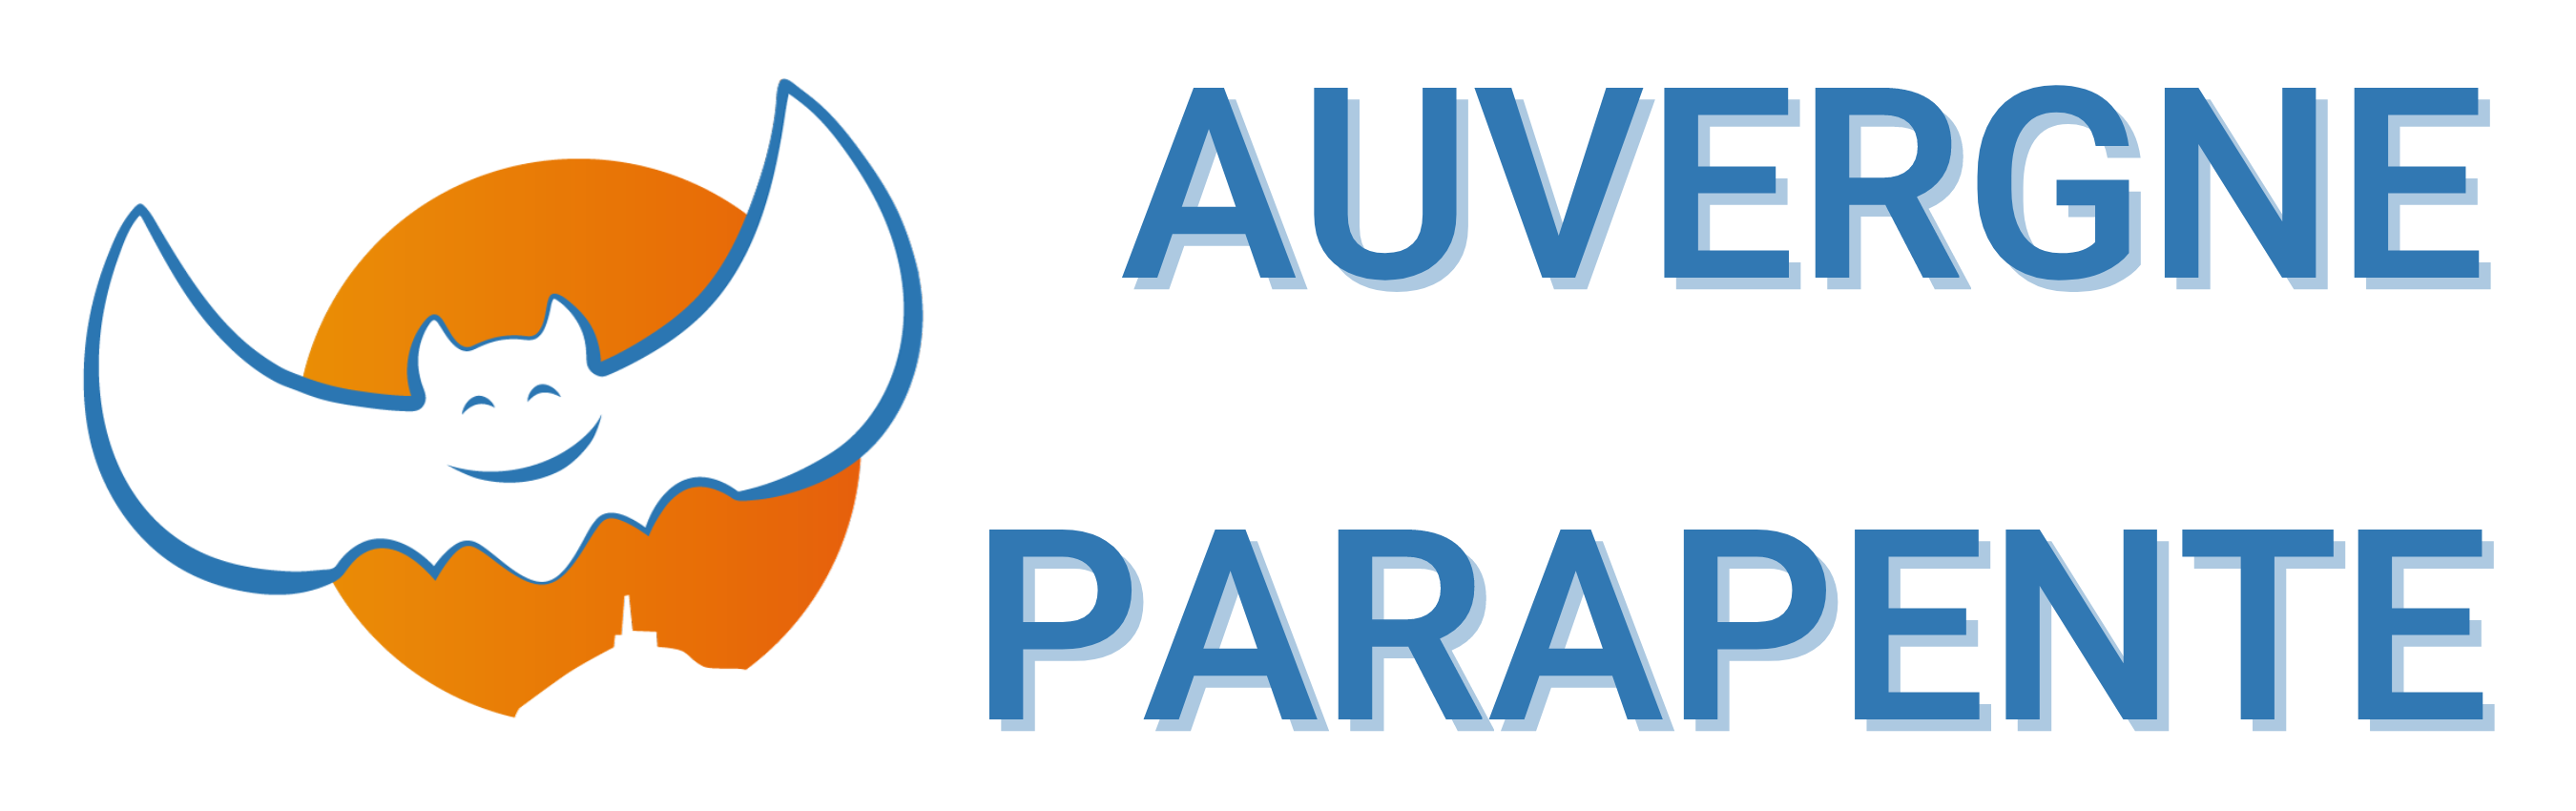 Auvergne Parapente